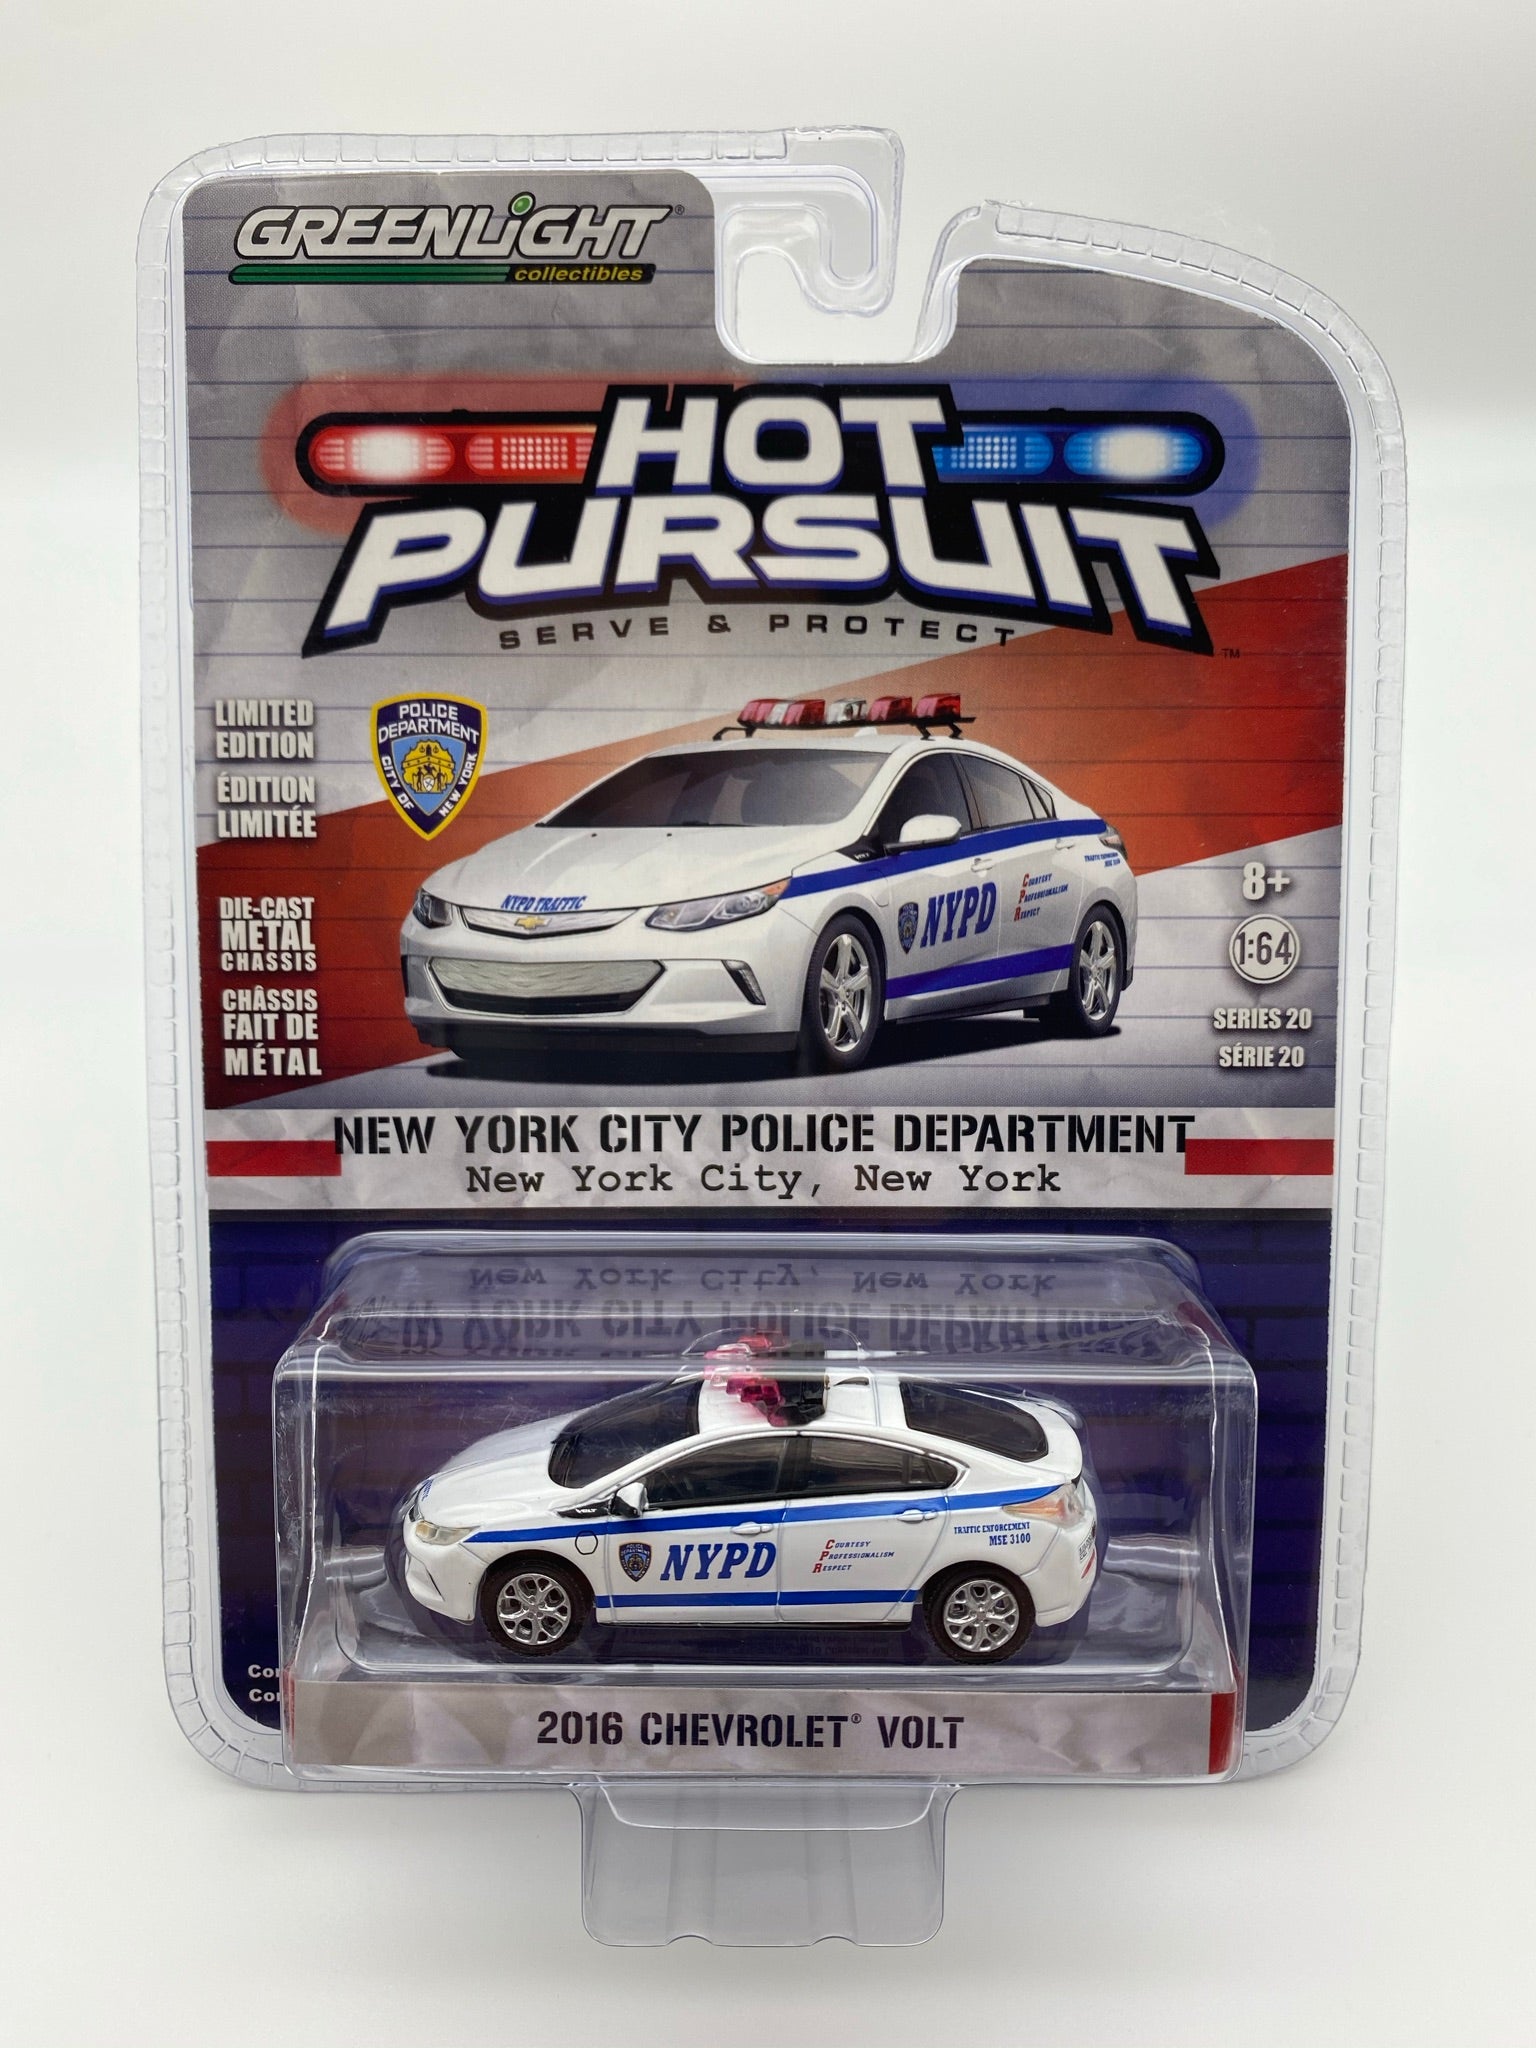 Greenlight 1/64 Hot Pursuit Series 20 - 2016 Chevrolet Volt - NYPD #42770-E